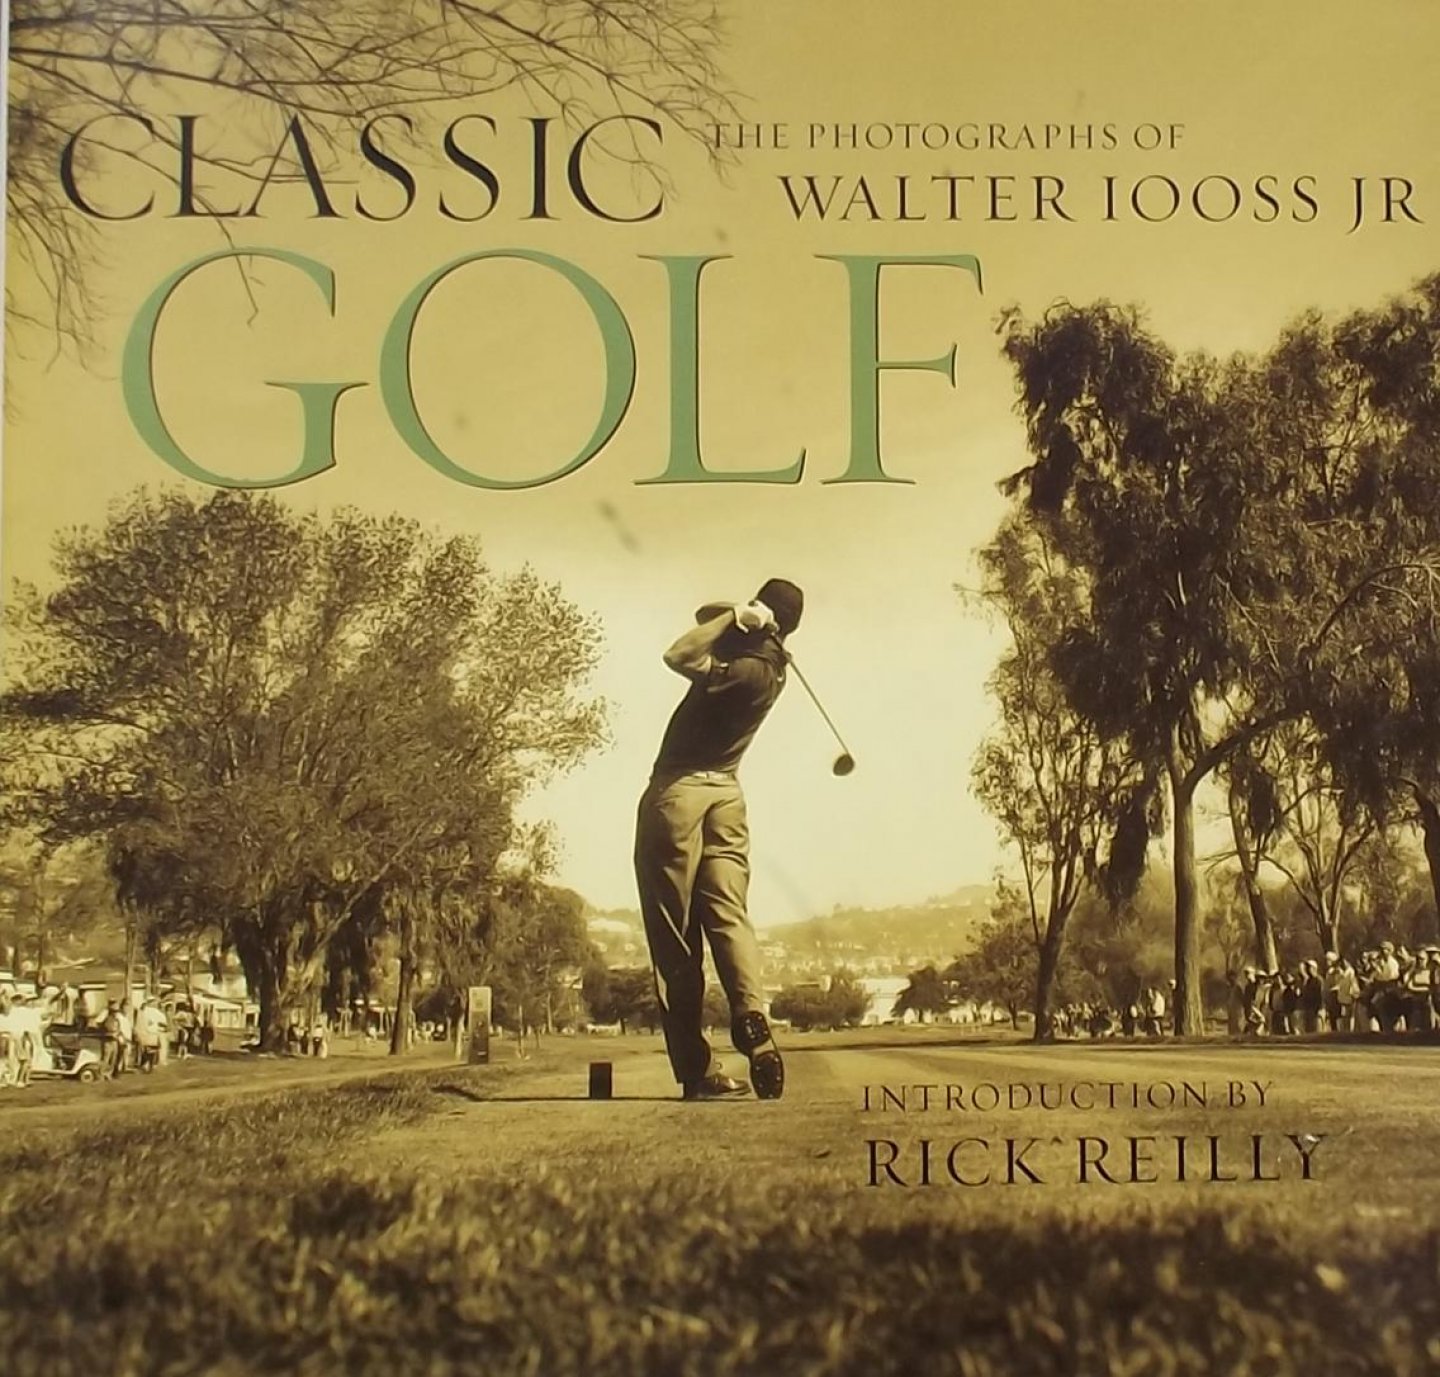 Walter Iooss jr. - Classic Golf: The Photographs of Walter Iooss Jr.